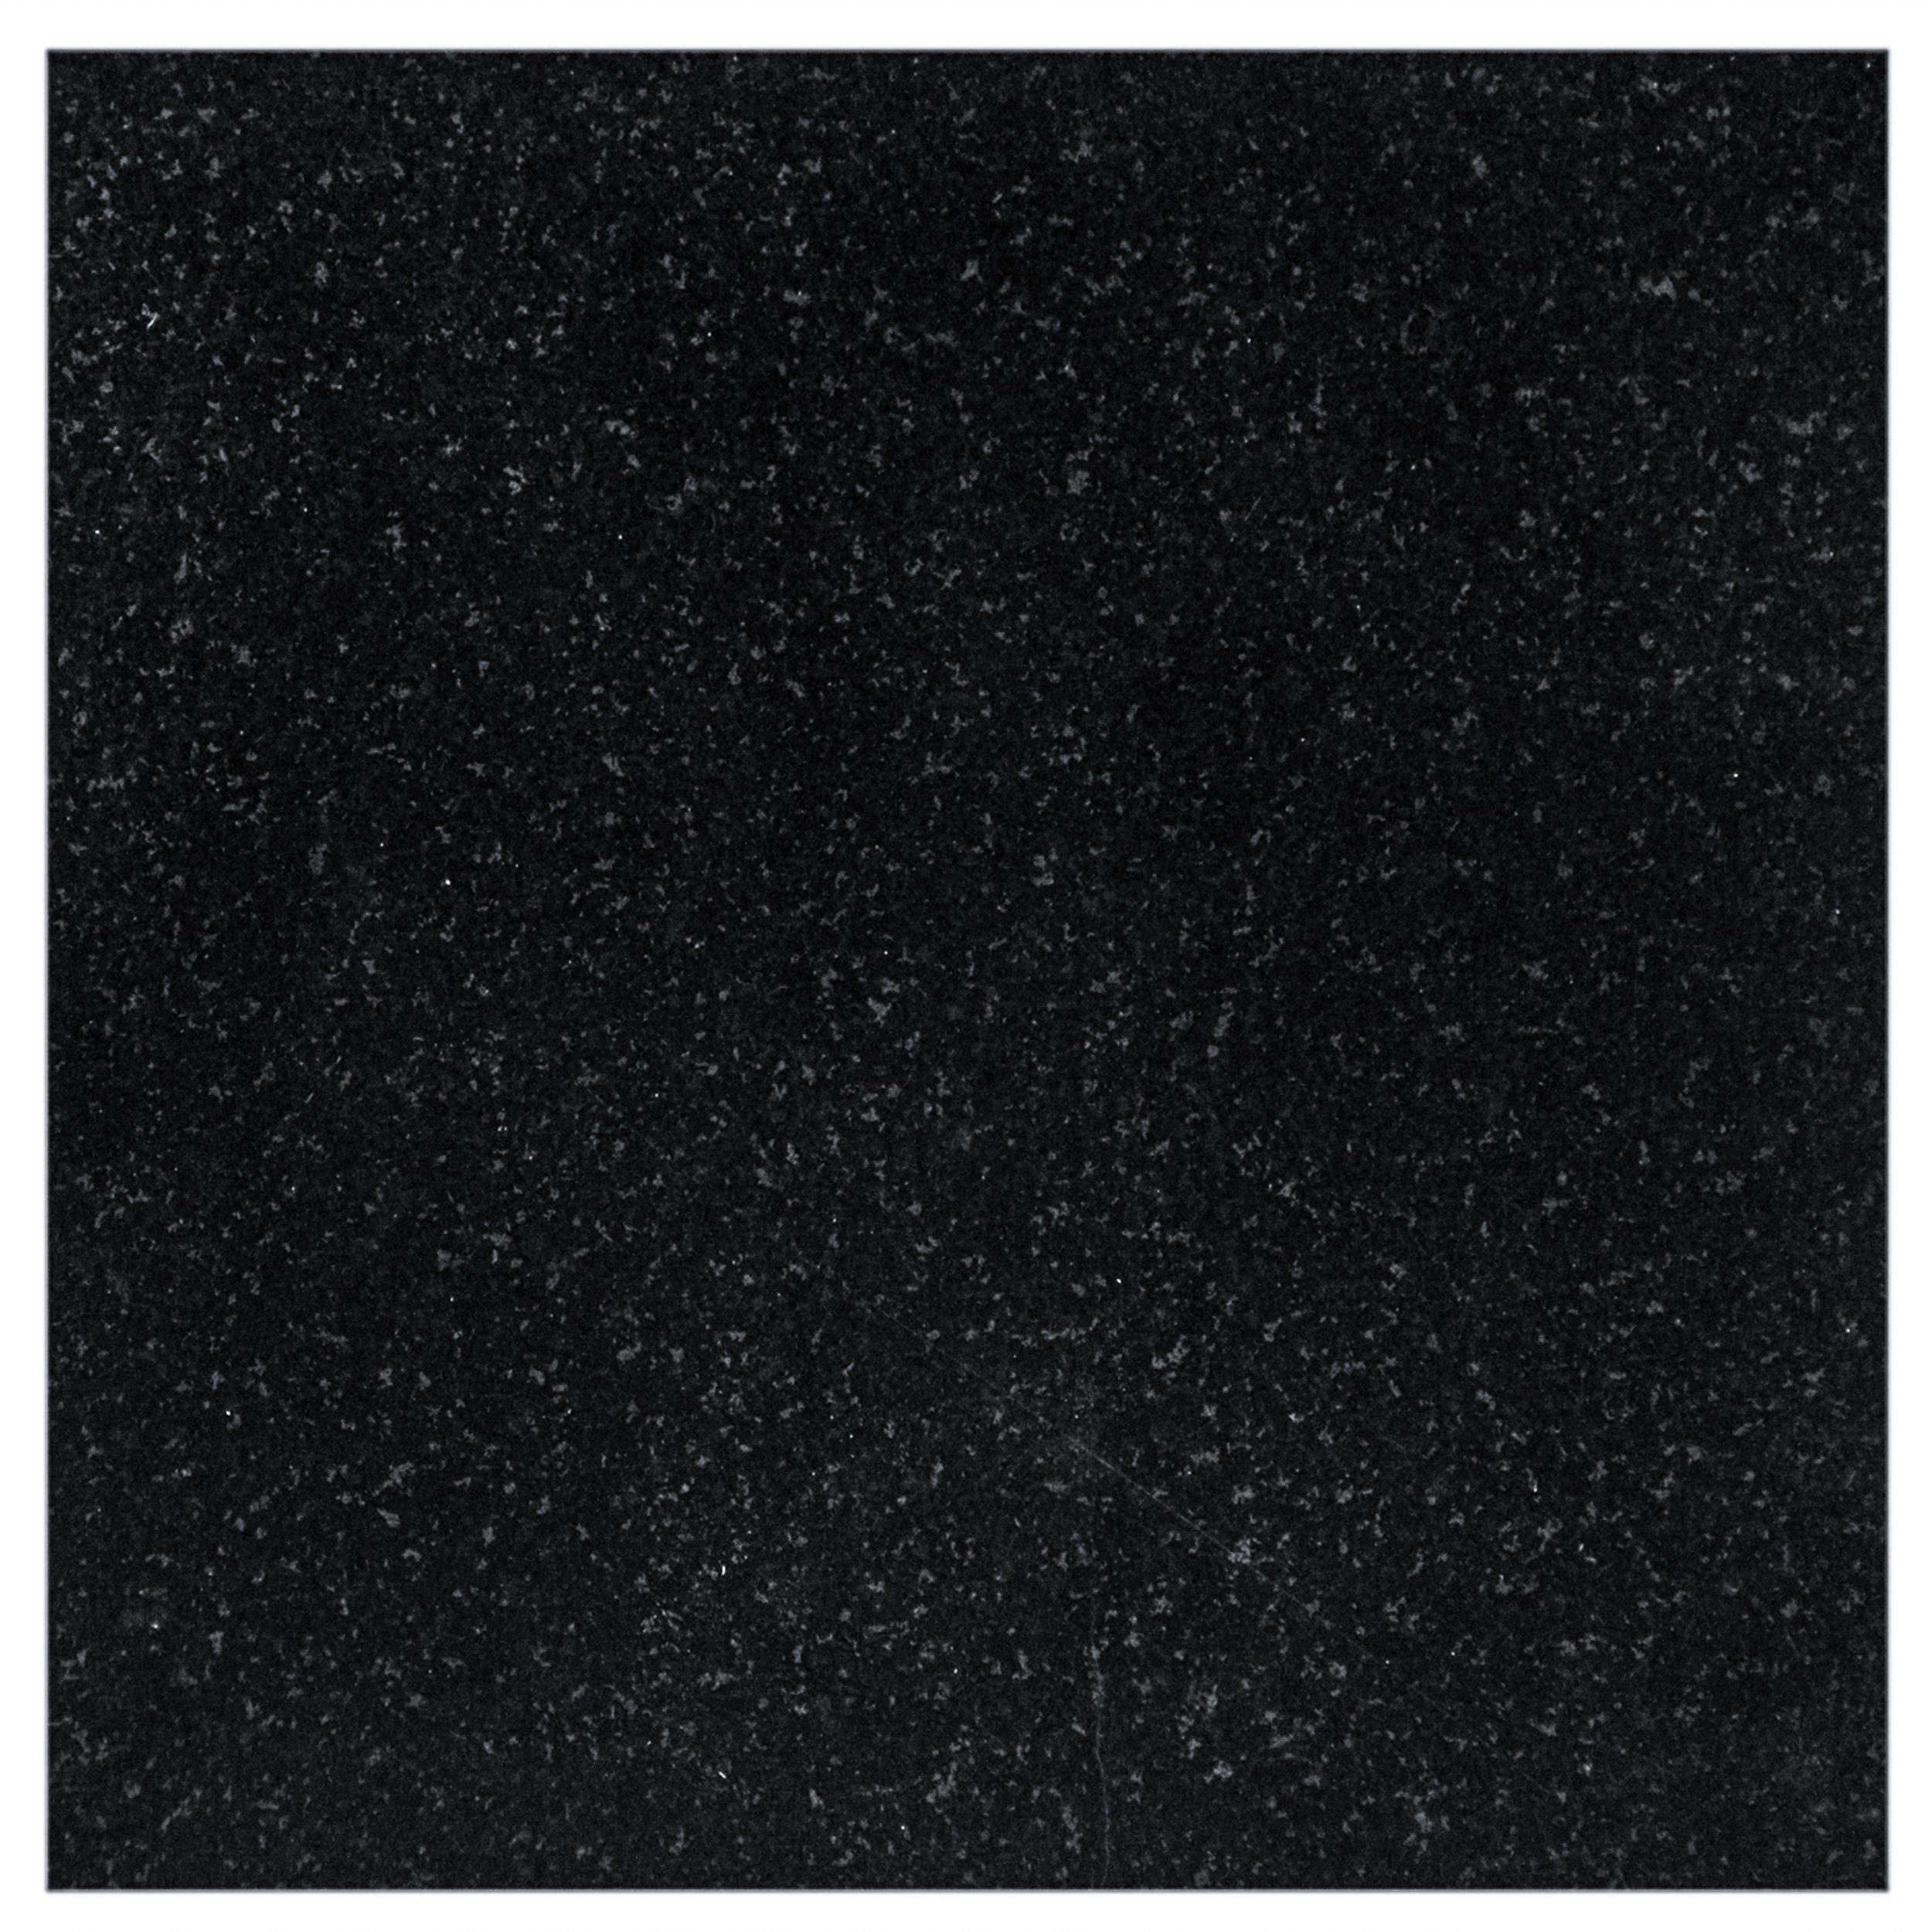 Absolute Black Extra Honed Granite Tile 12x12